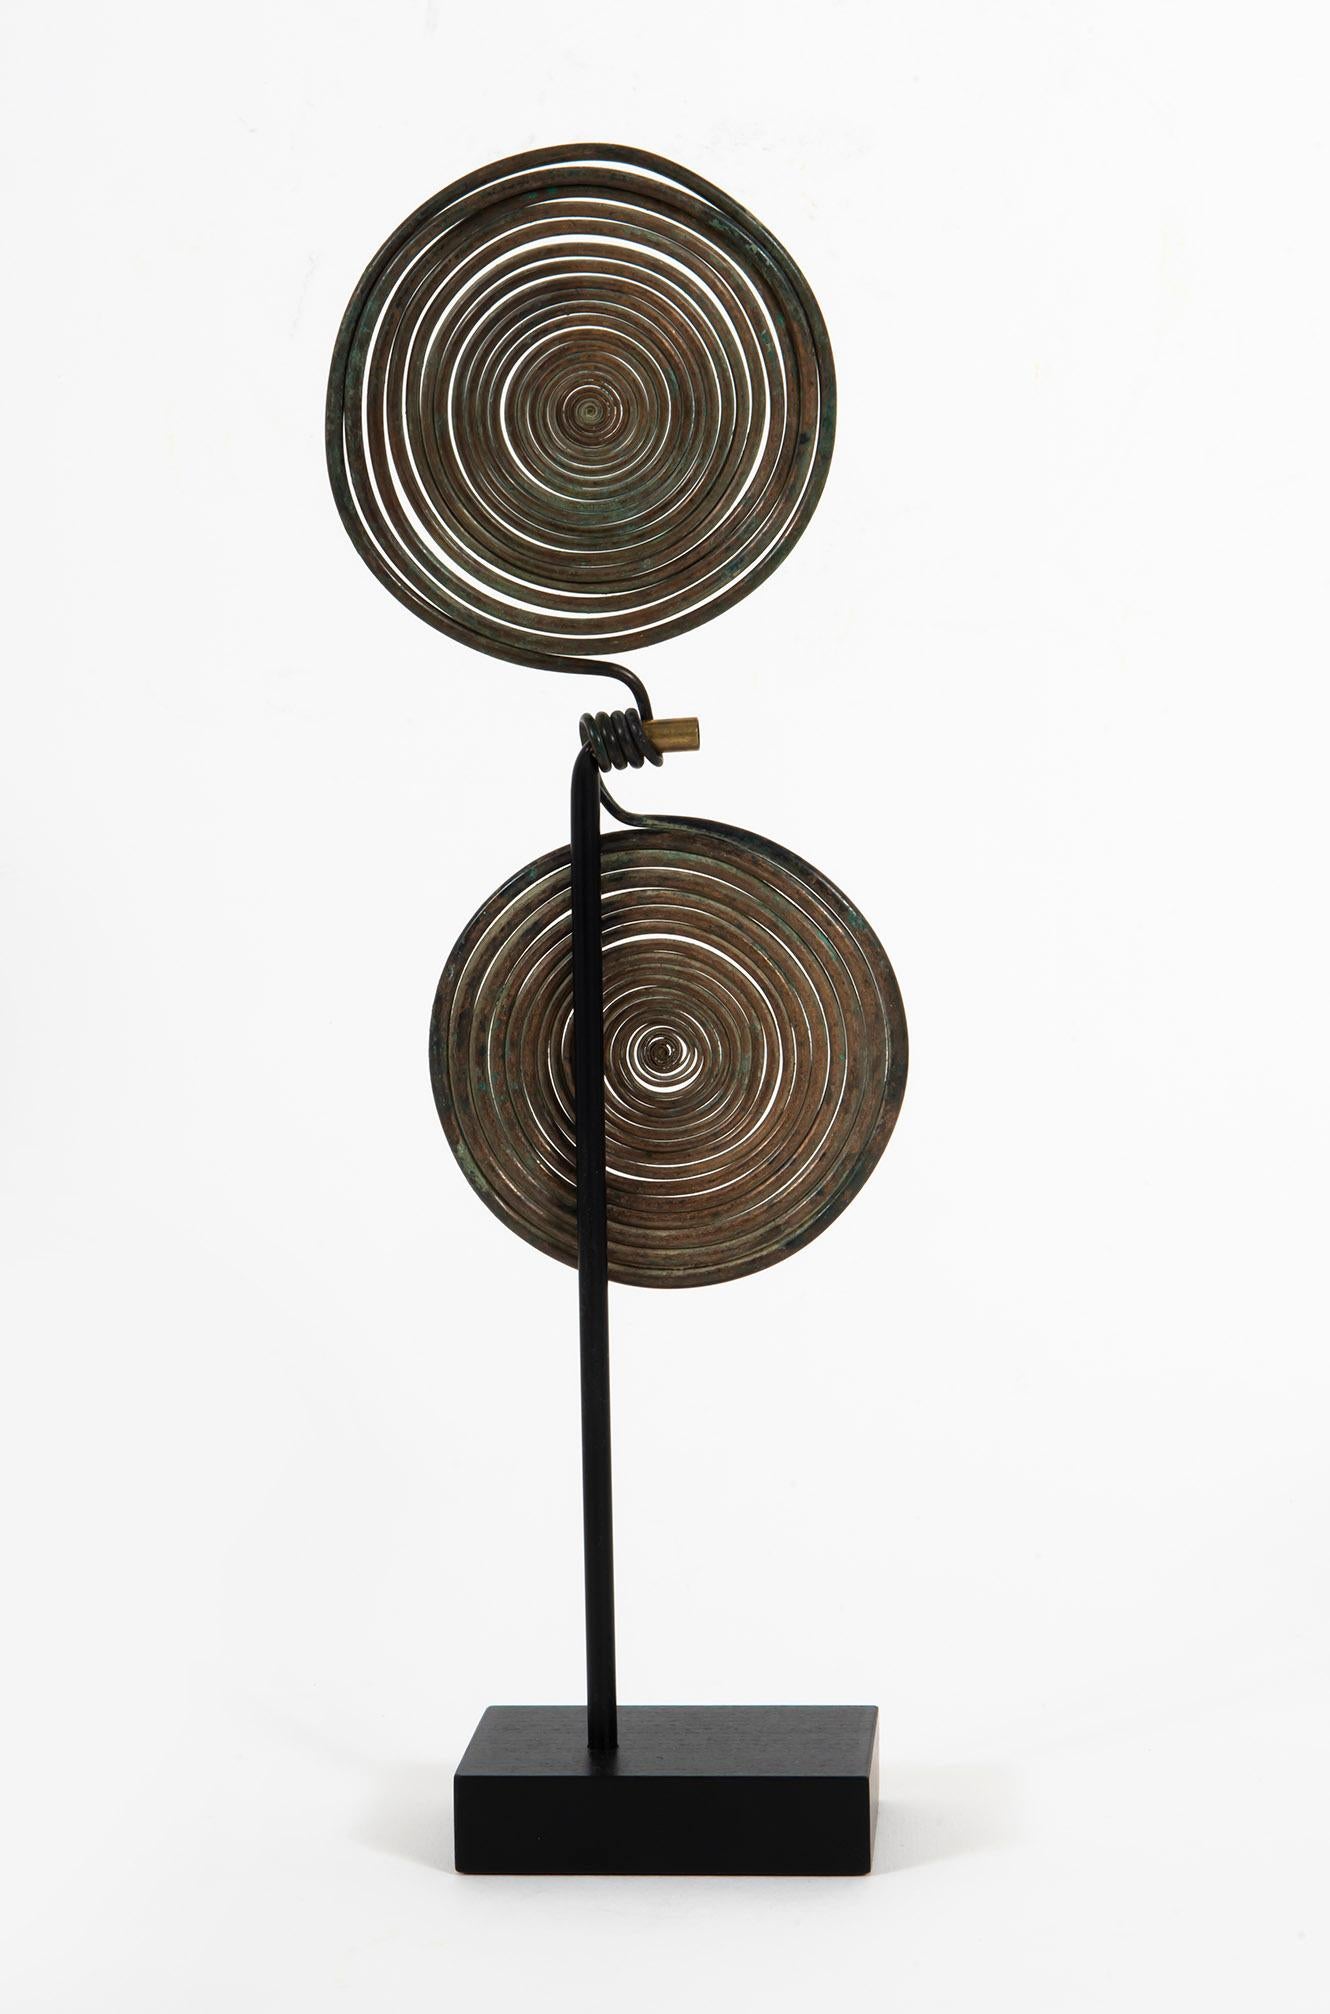 Spiral fibula, Hallstatt, 1st Iron Age, Bronze, Sculpture, Design, Antiquity